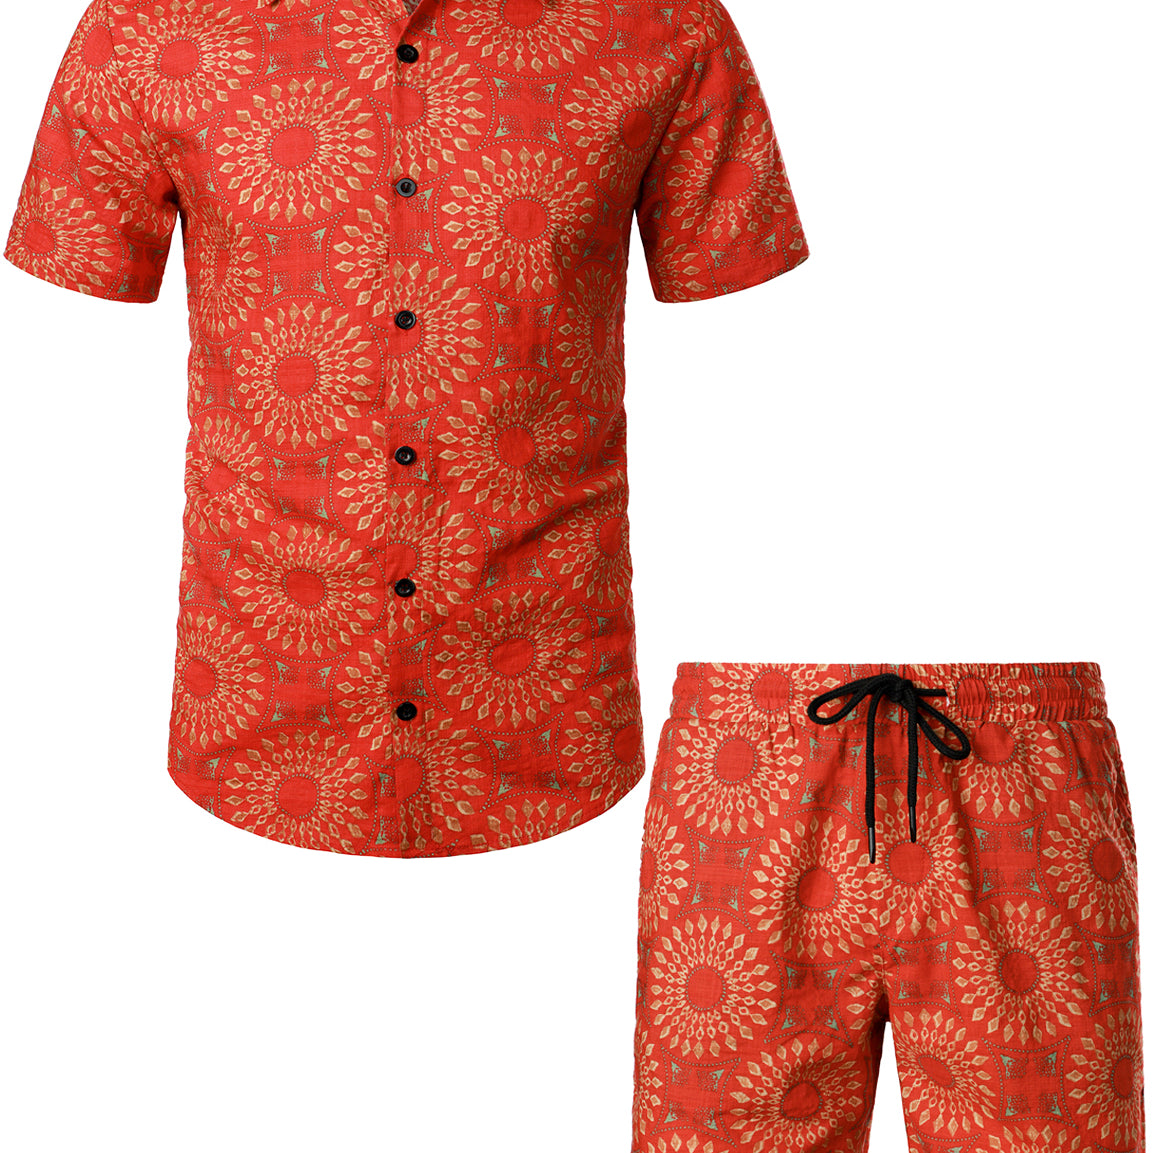 Men's Retro Casual Boho 70s Vintage Matching Shirt and Shorts Set